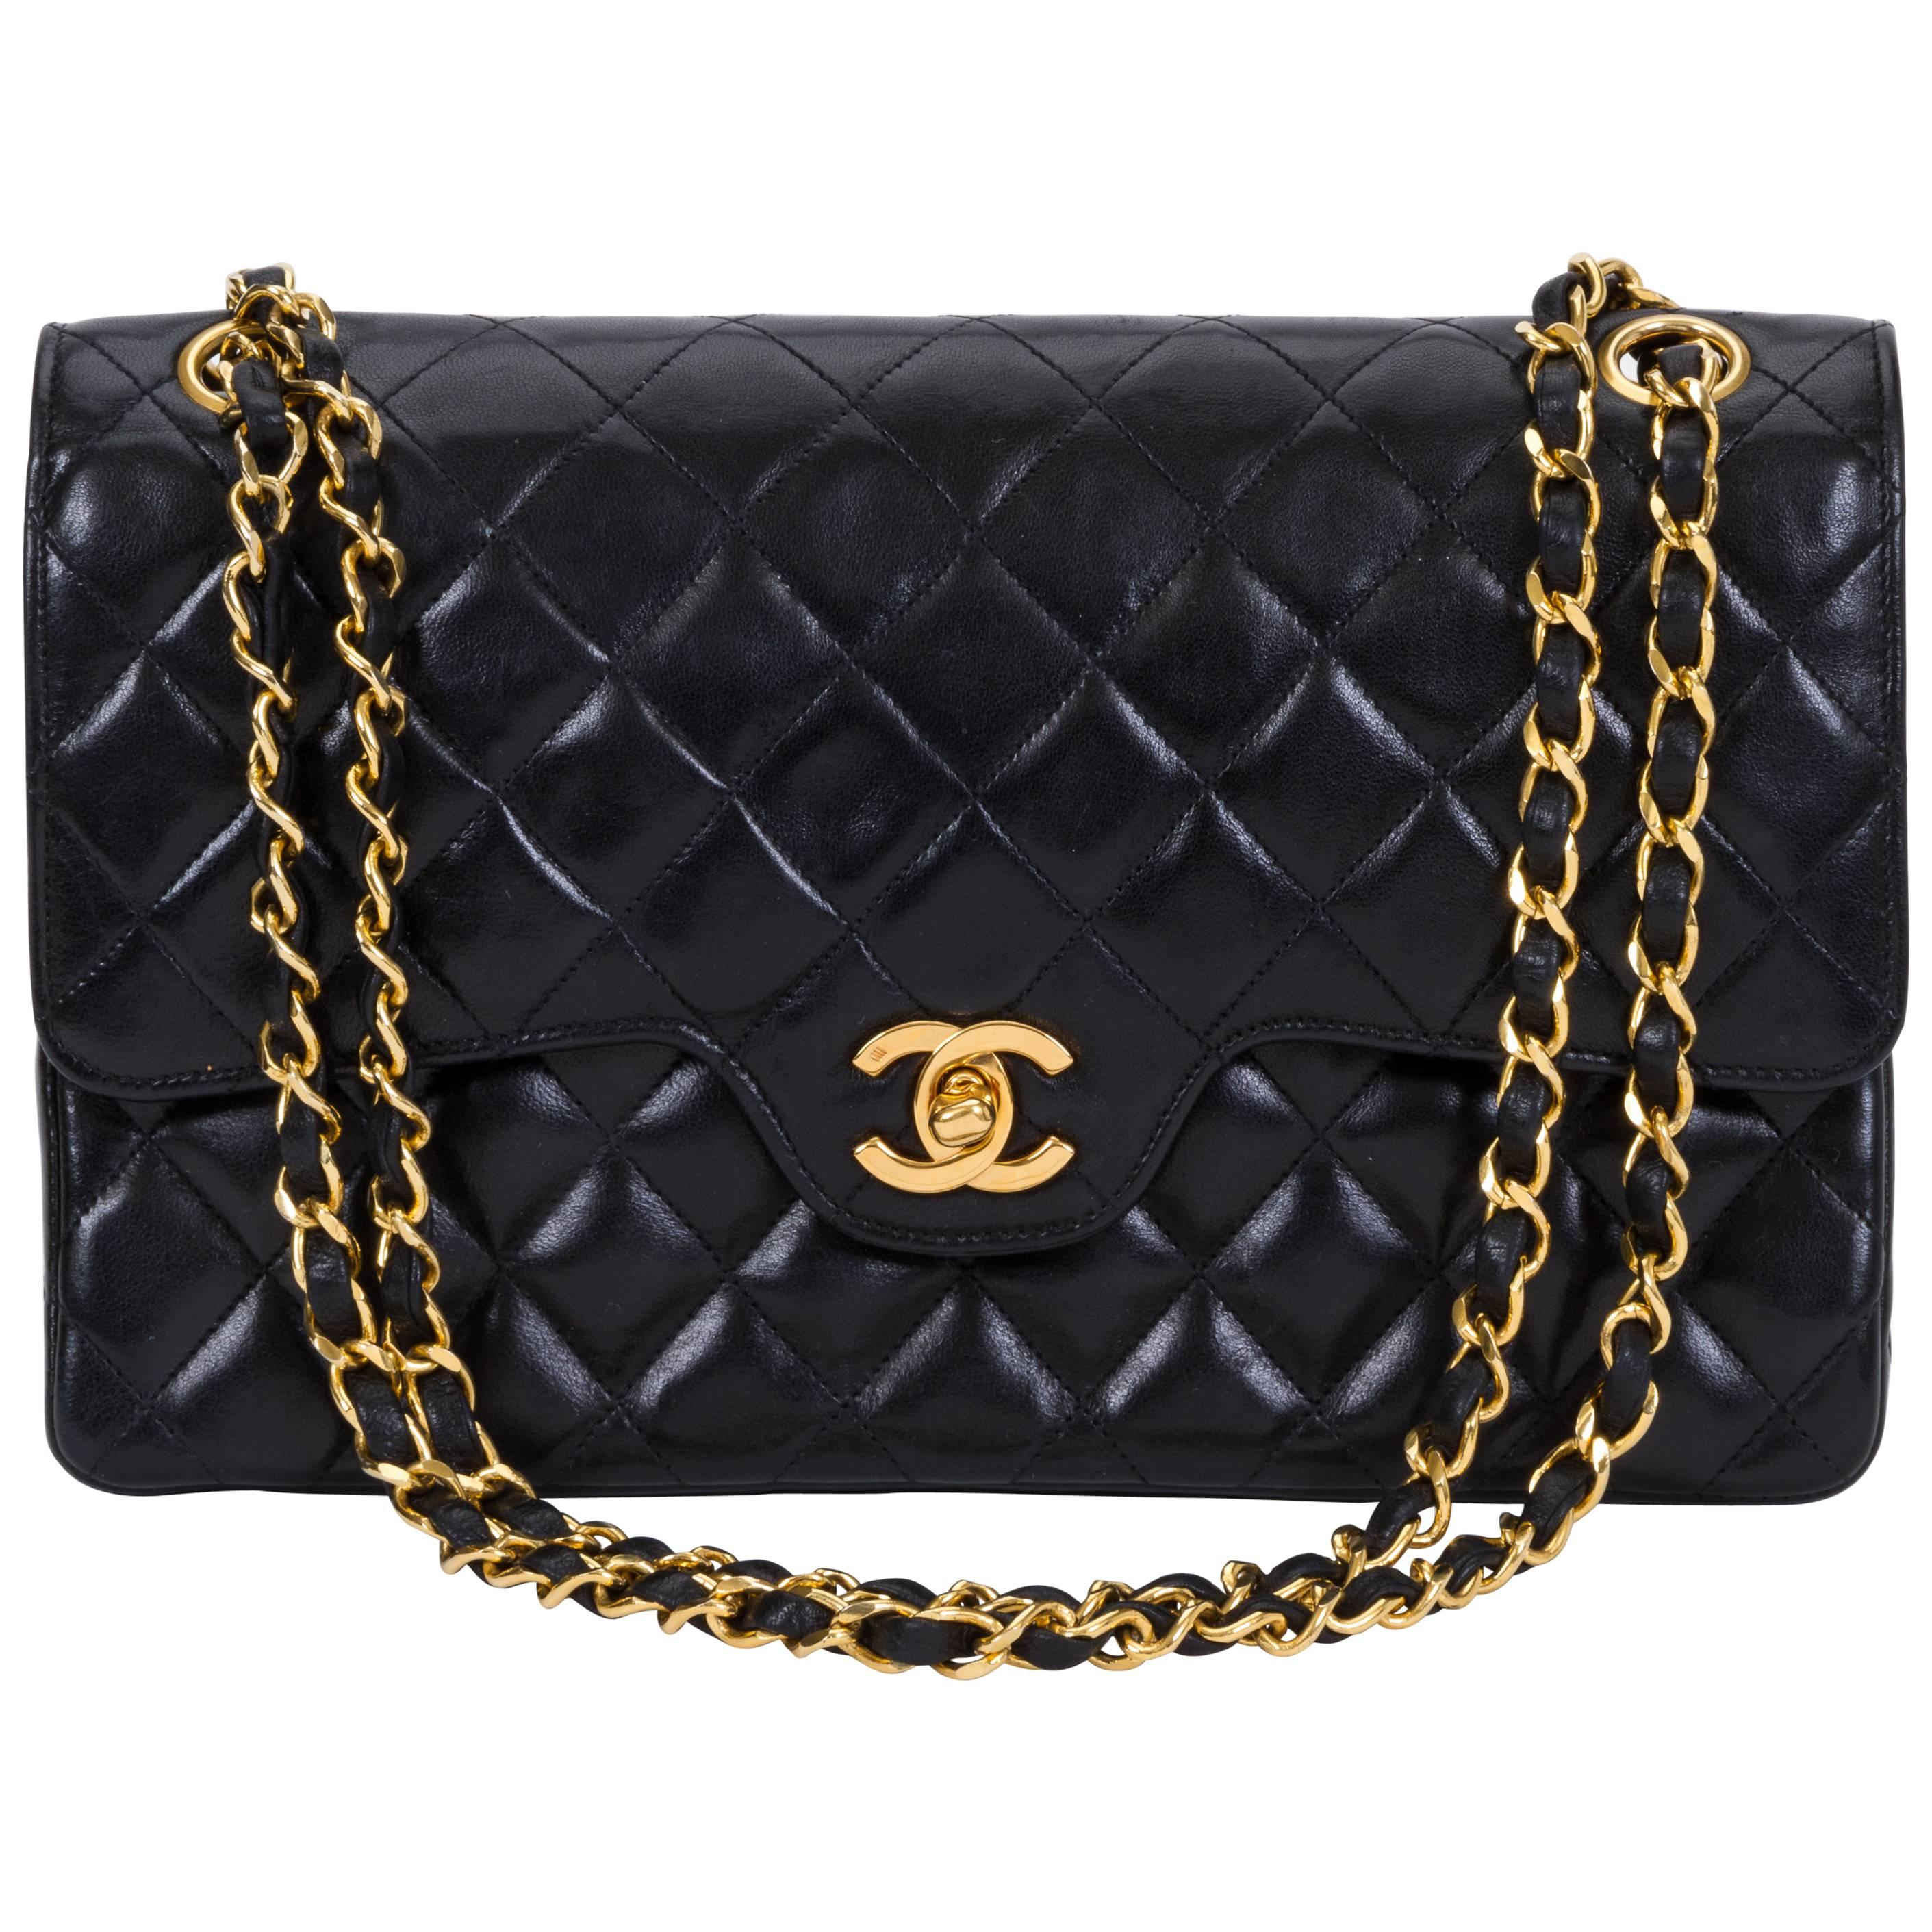  Chanel Double Flap Classic Black 10" Bag